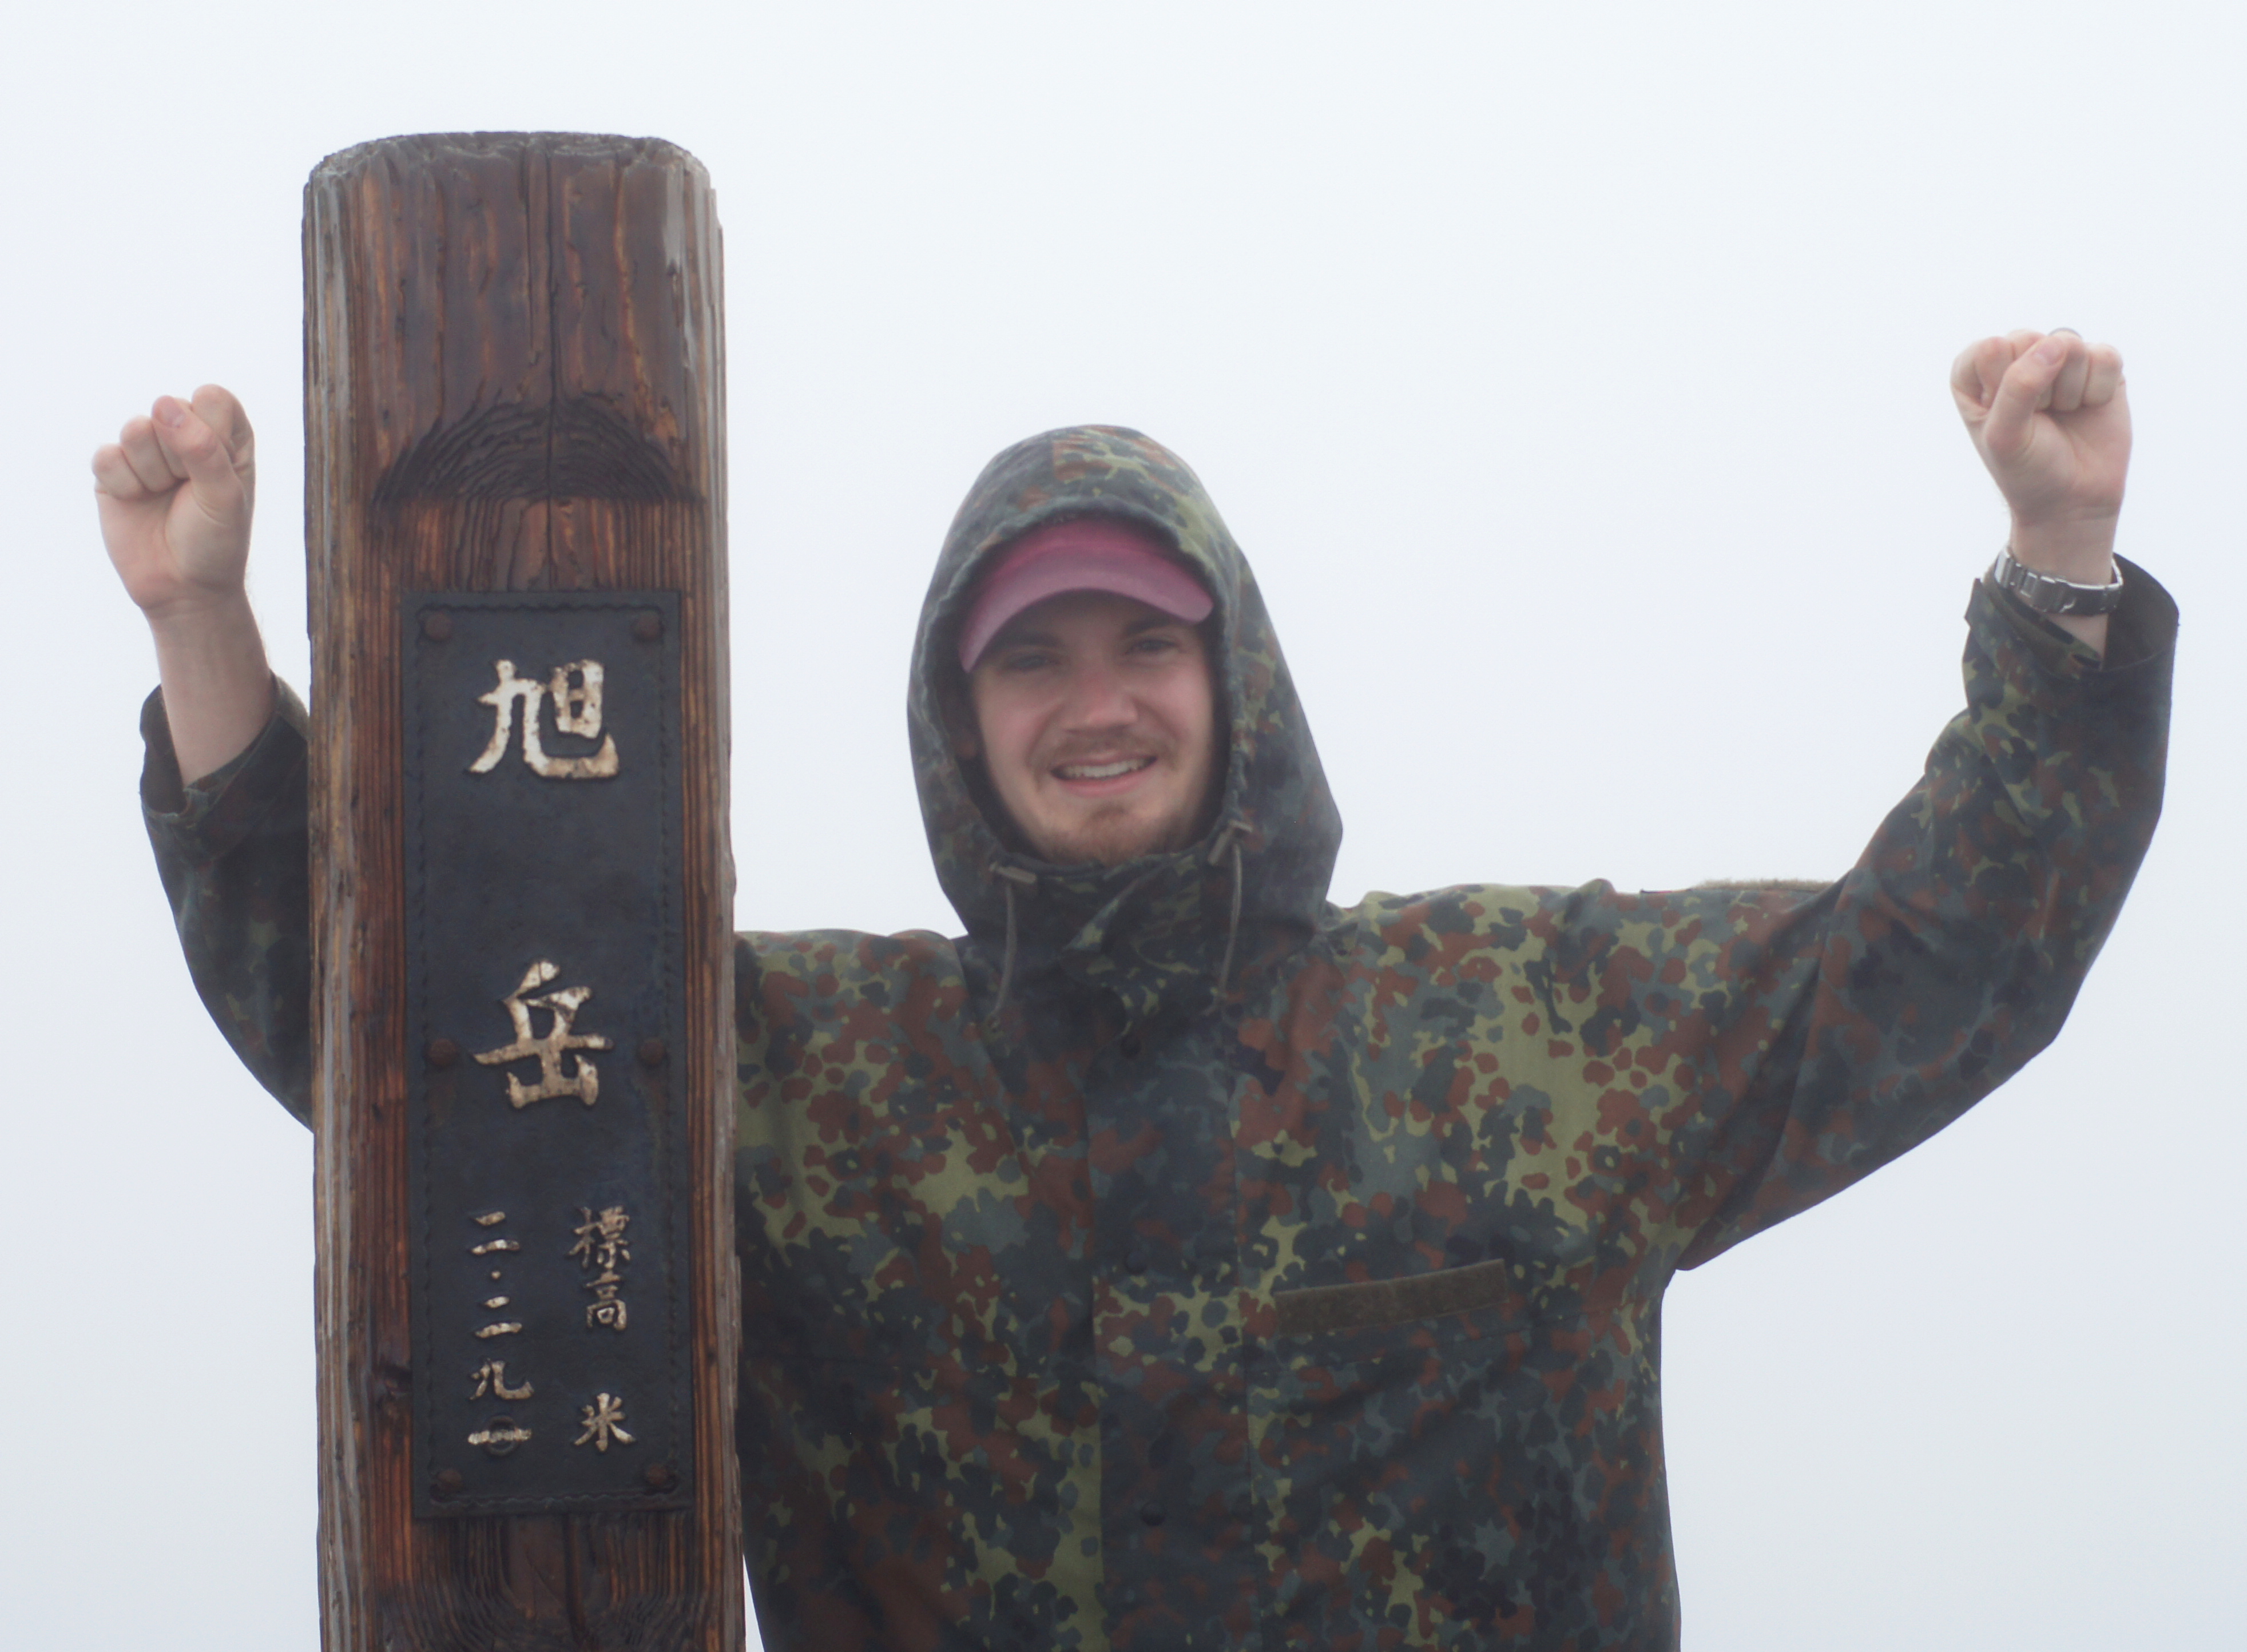 Corey at the Mount Asahidake Summit